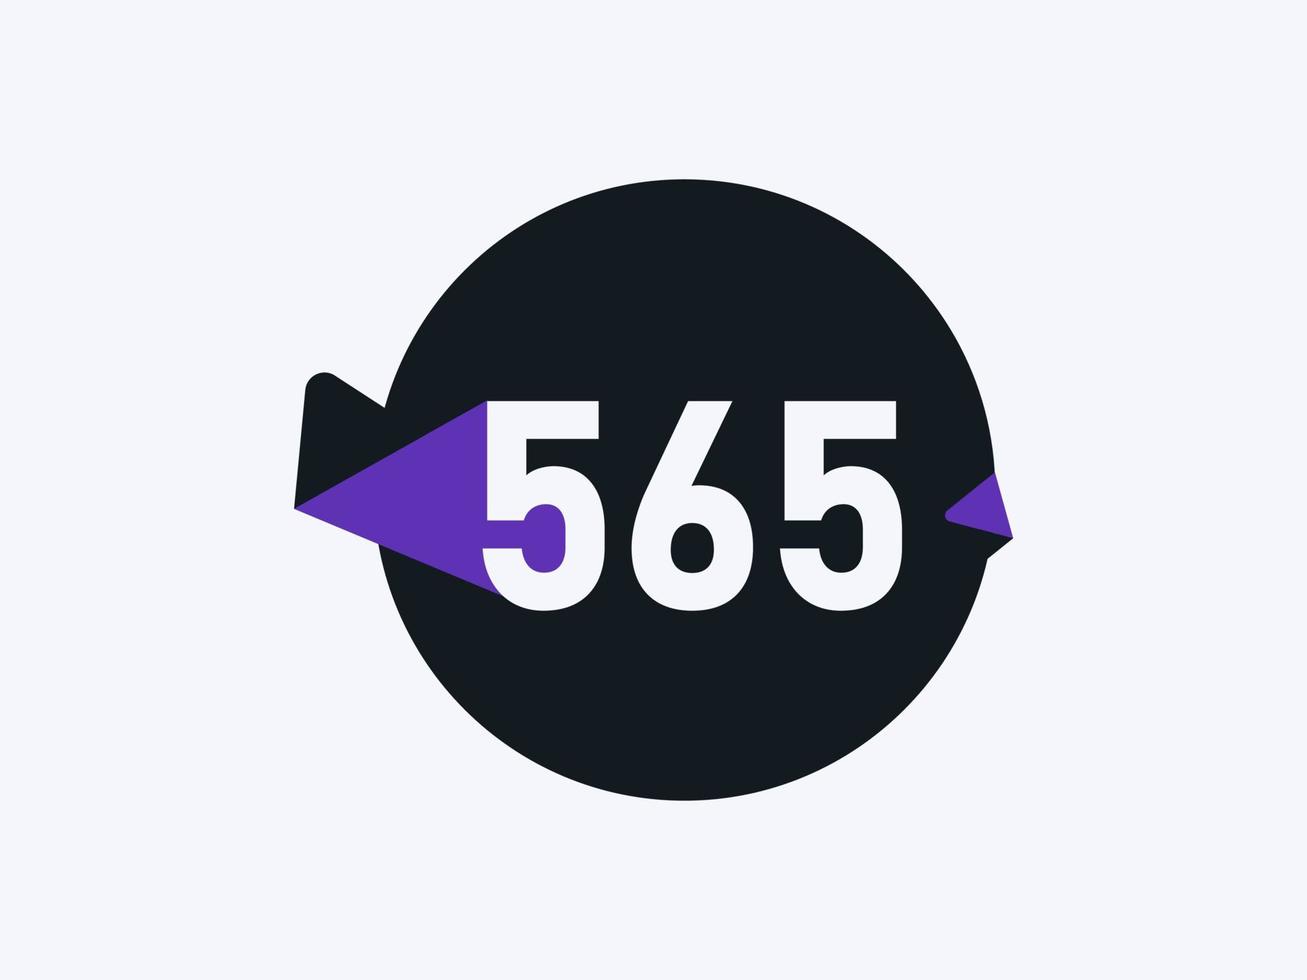 565 Number logo icon design vector image. Number logo icon design vector image